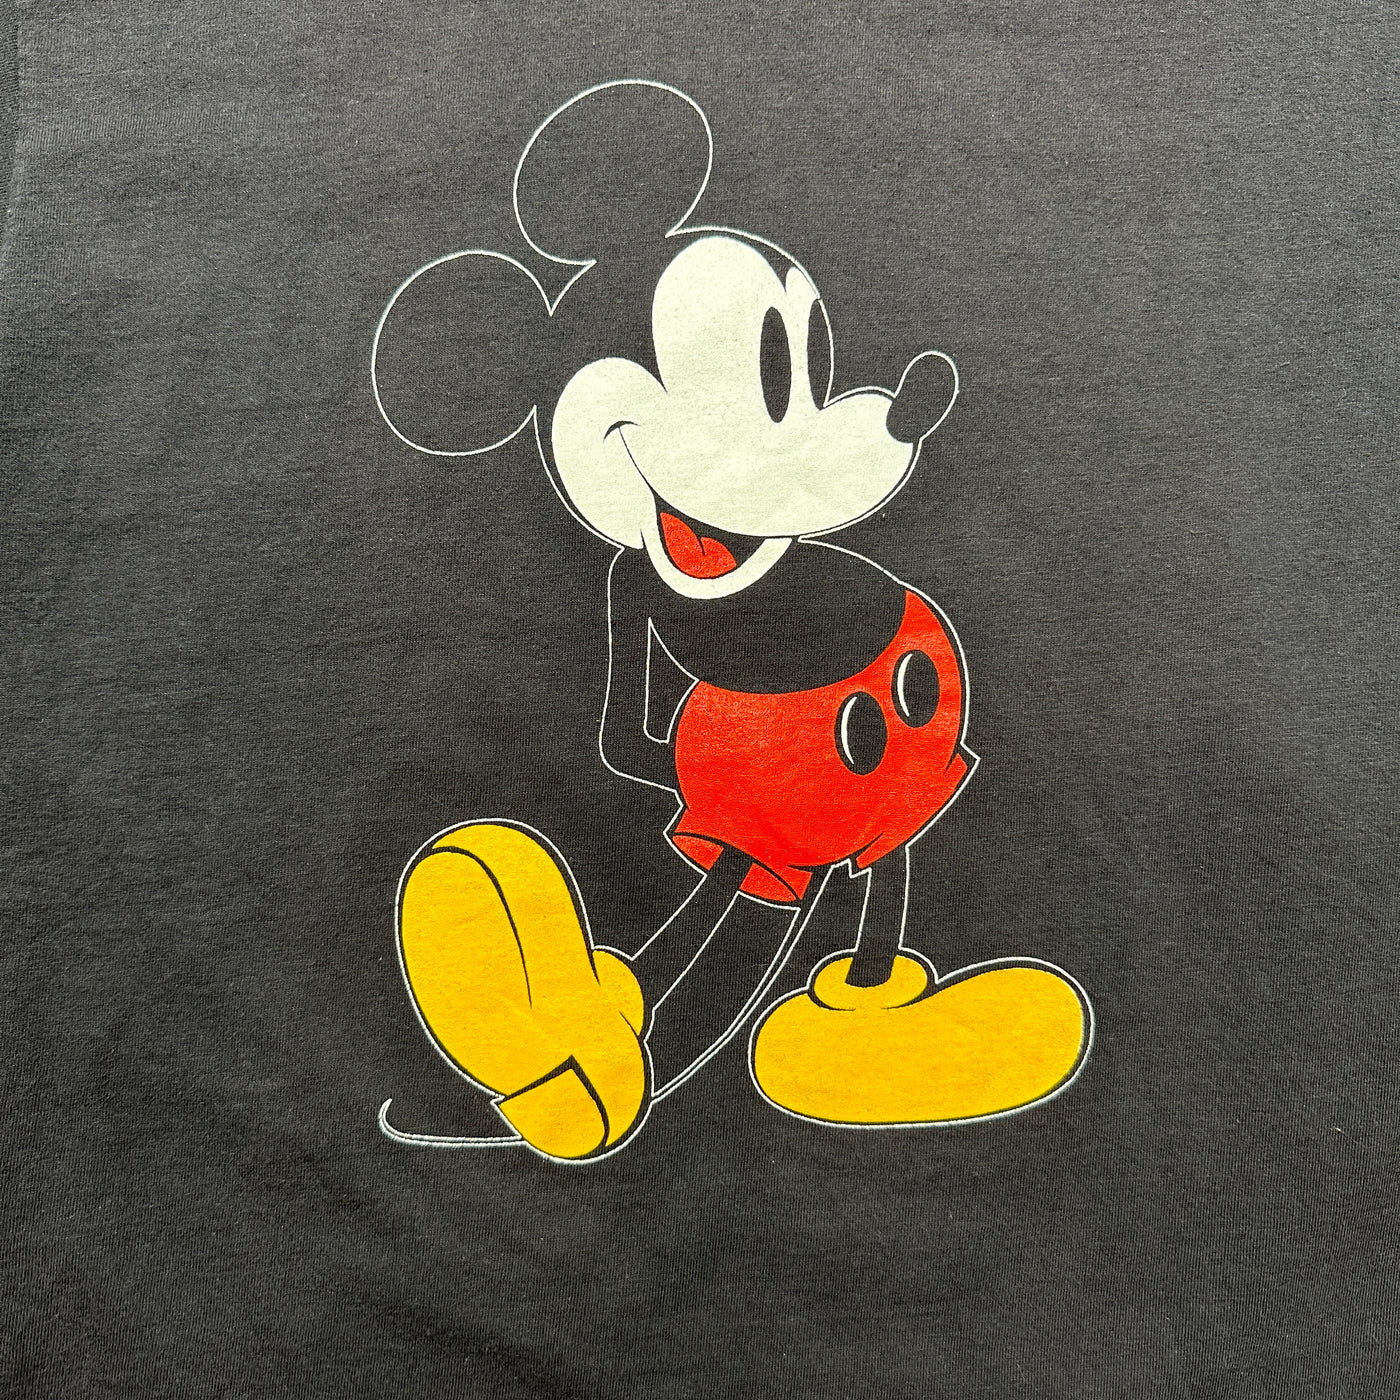 Classic Mickey Mouse Disney Black T-shirt sz XL